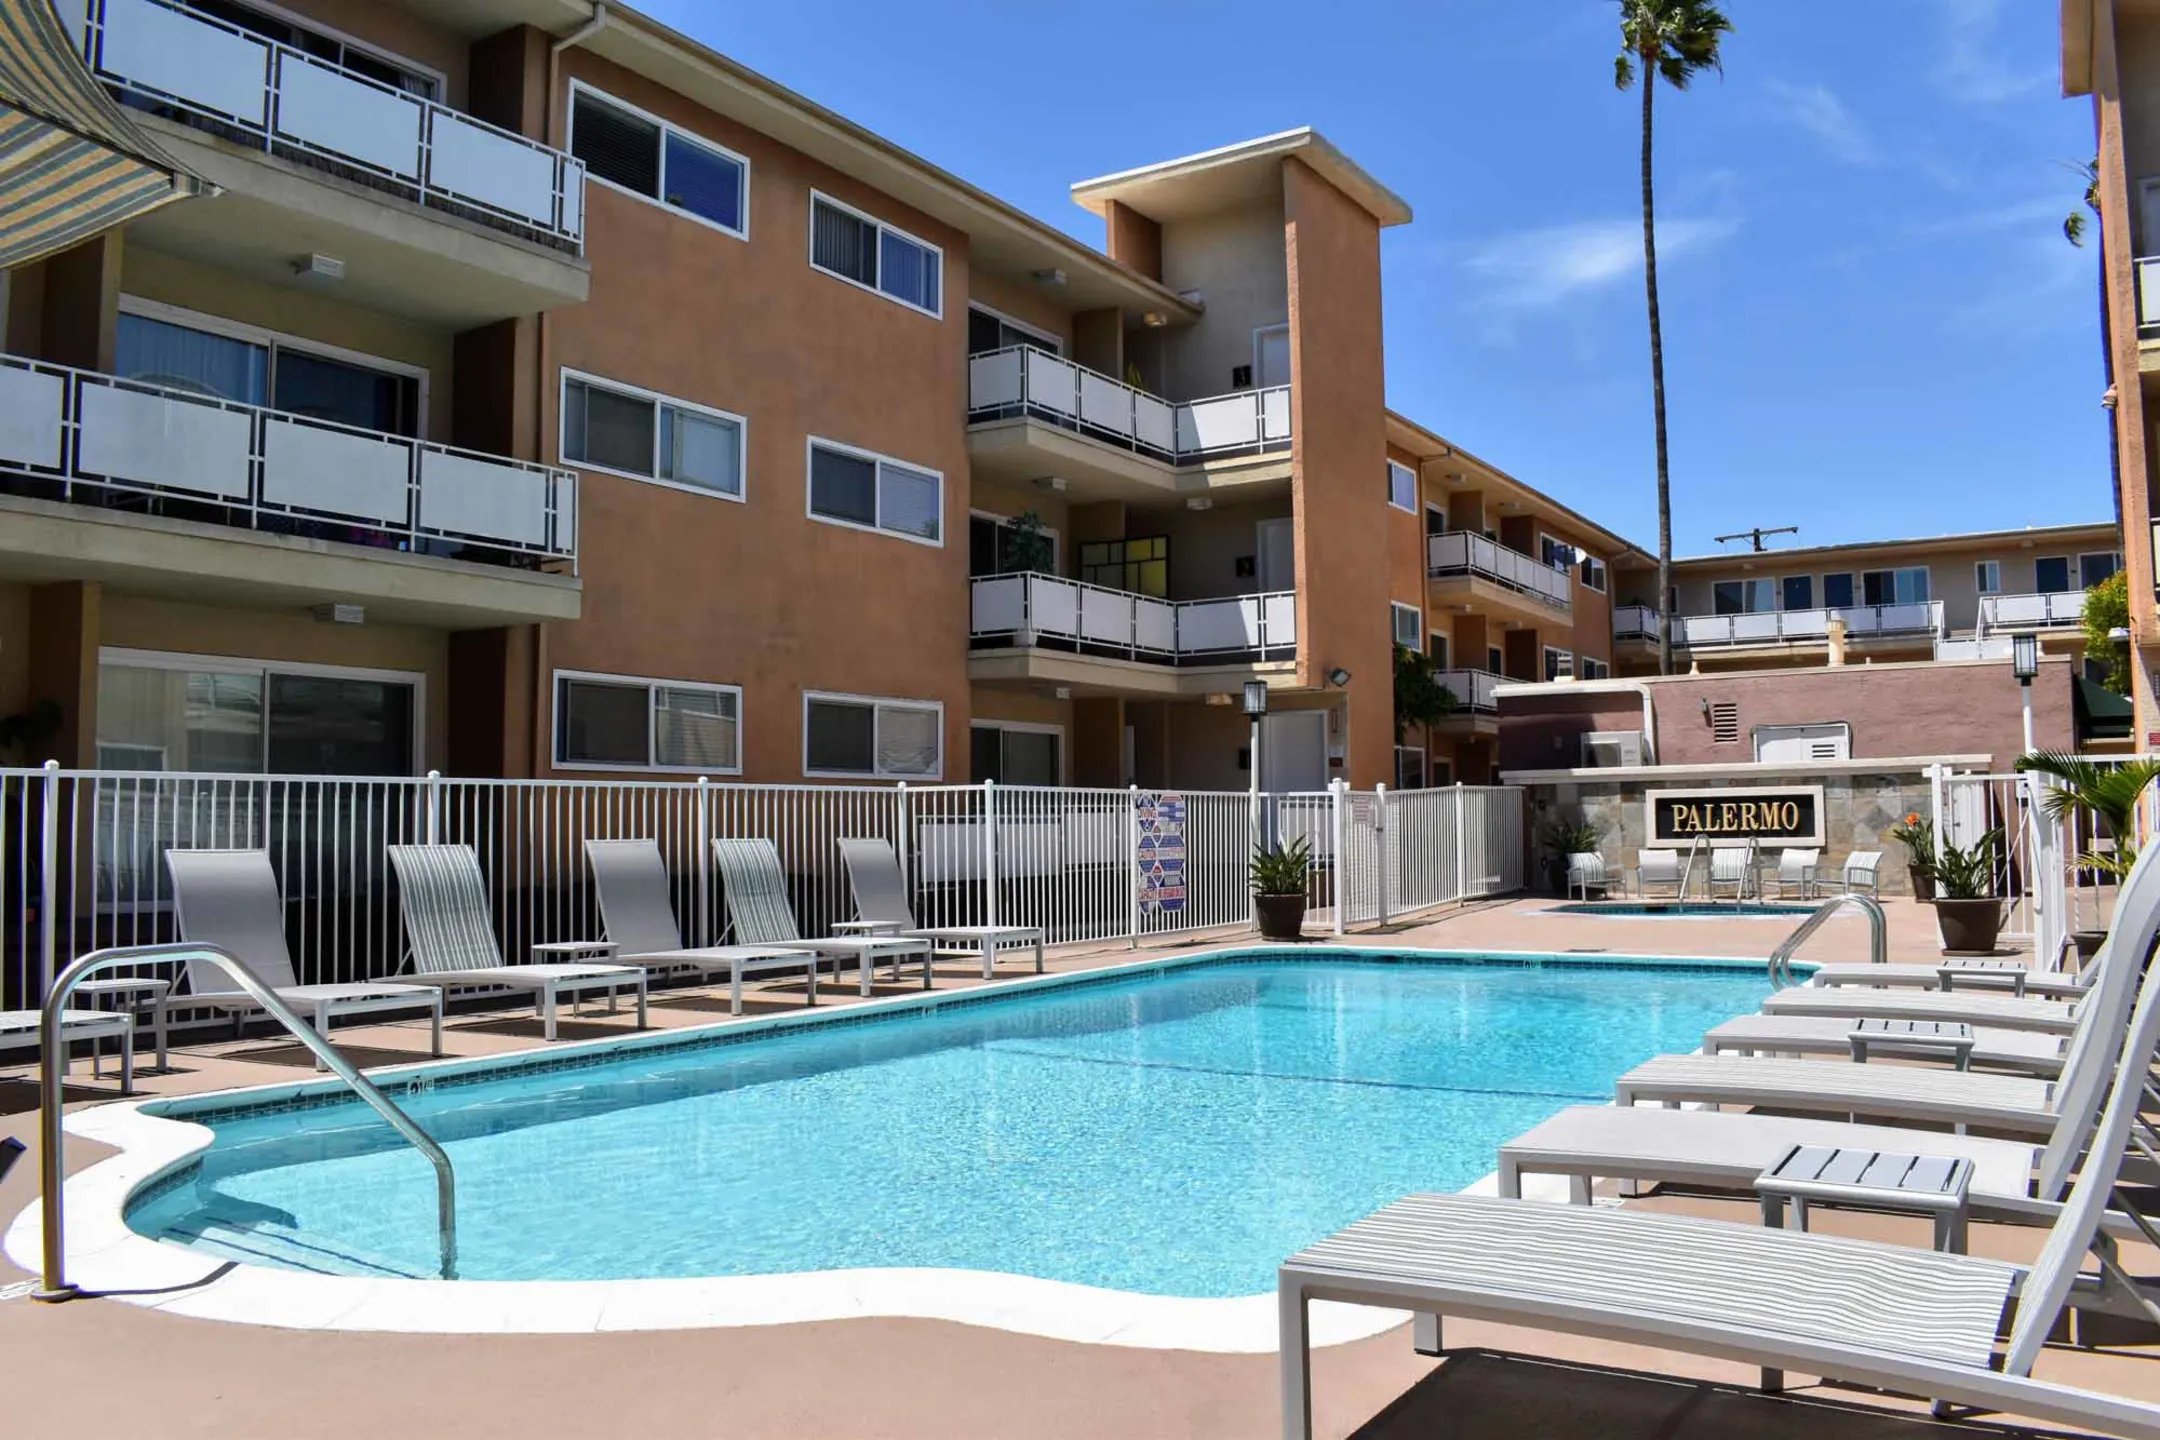 Pool - Palermo Apartments - Torrance, CA